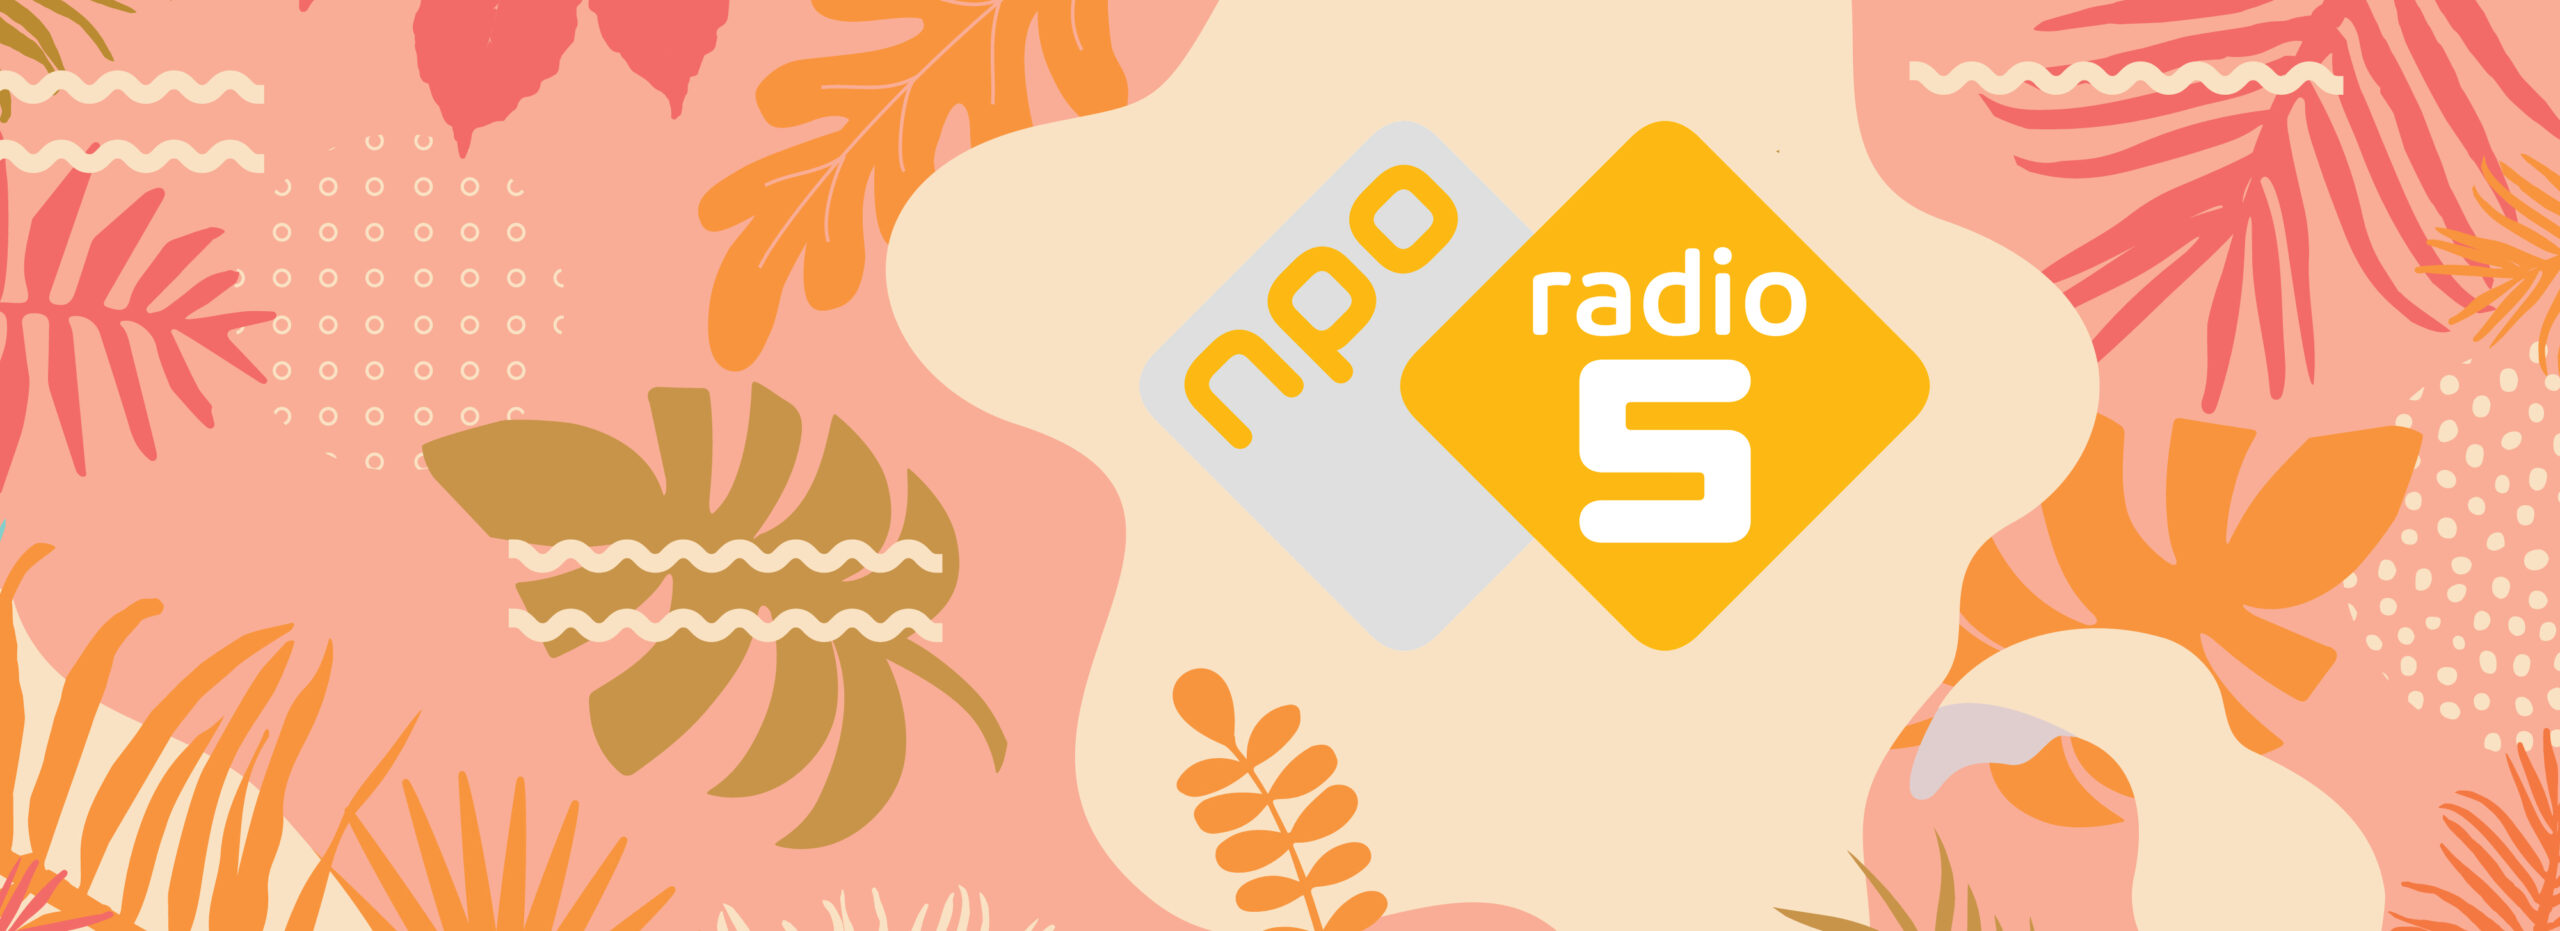 Maand Calligrapher media NPO Radio 5 komt met zomers programma - MAX Vandaag